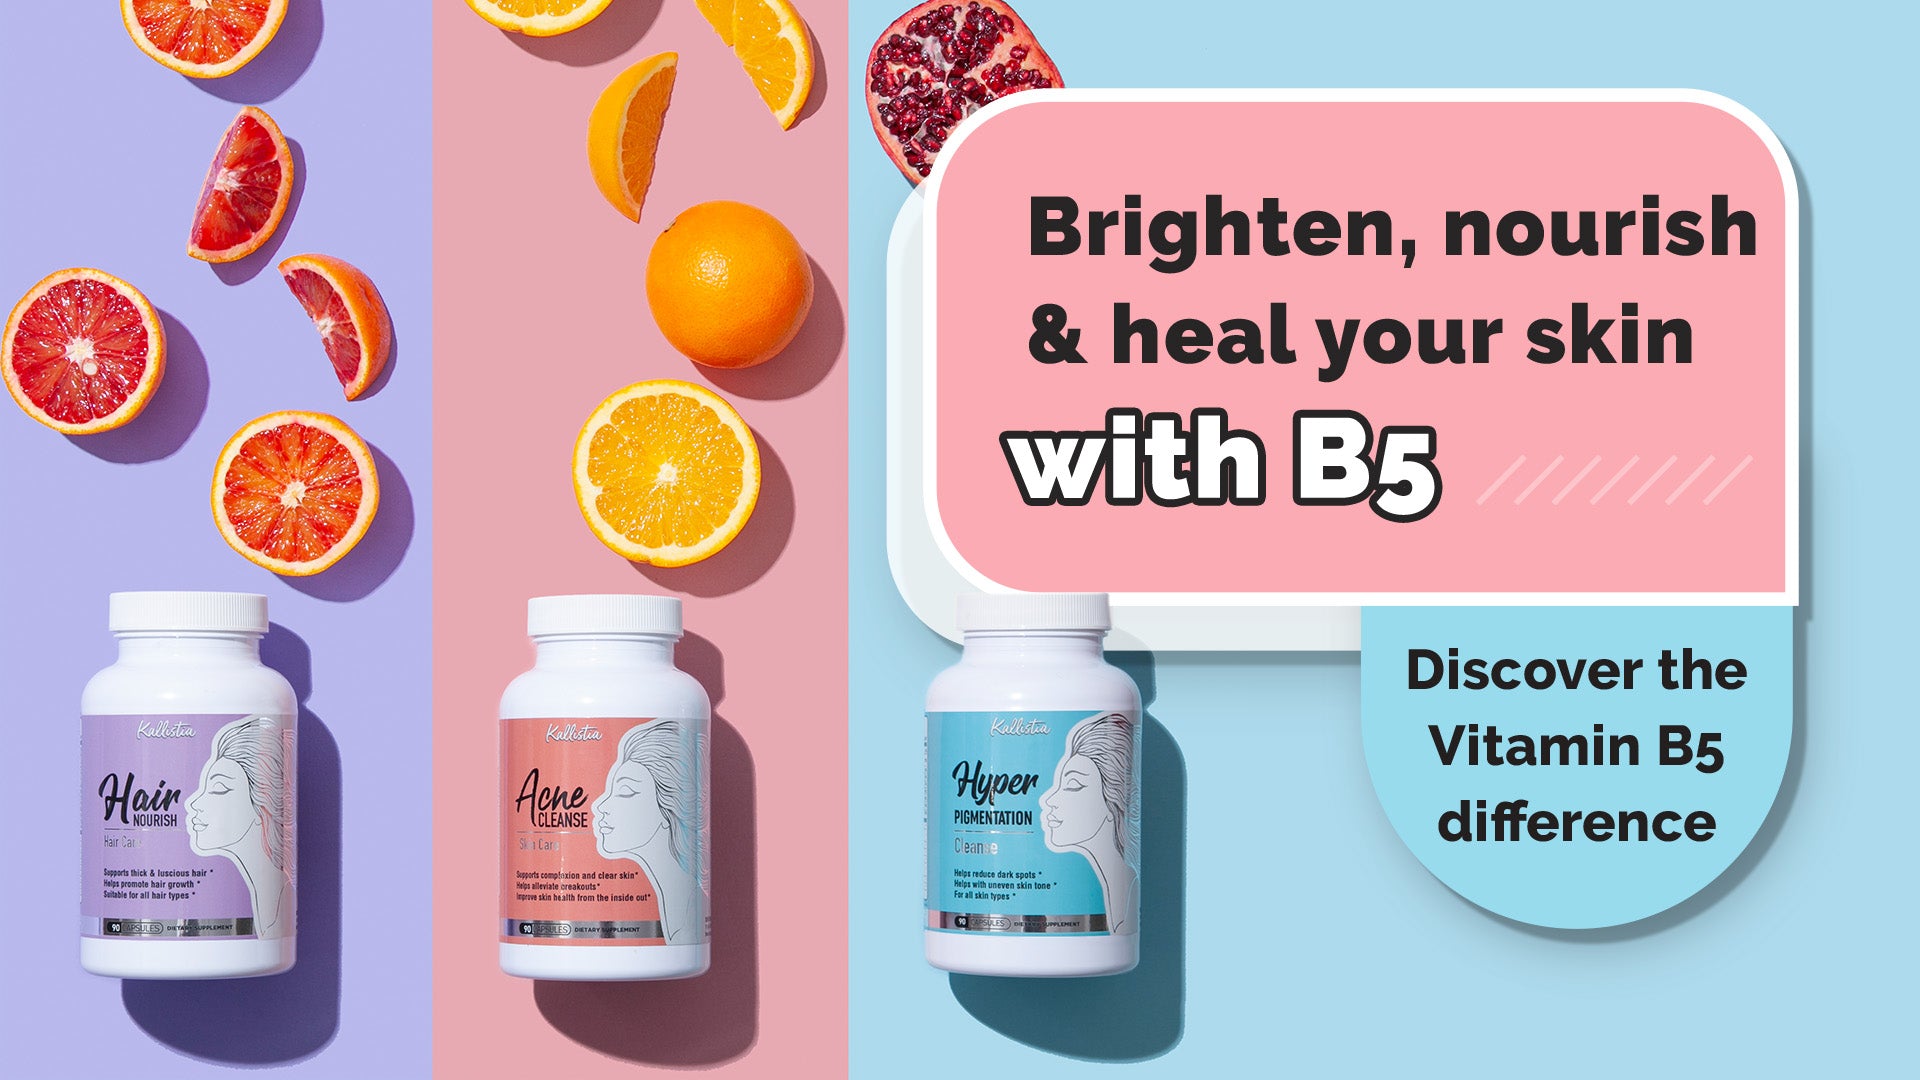 Brighten, nourish & heal your skin with Vitamin B5